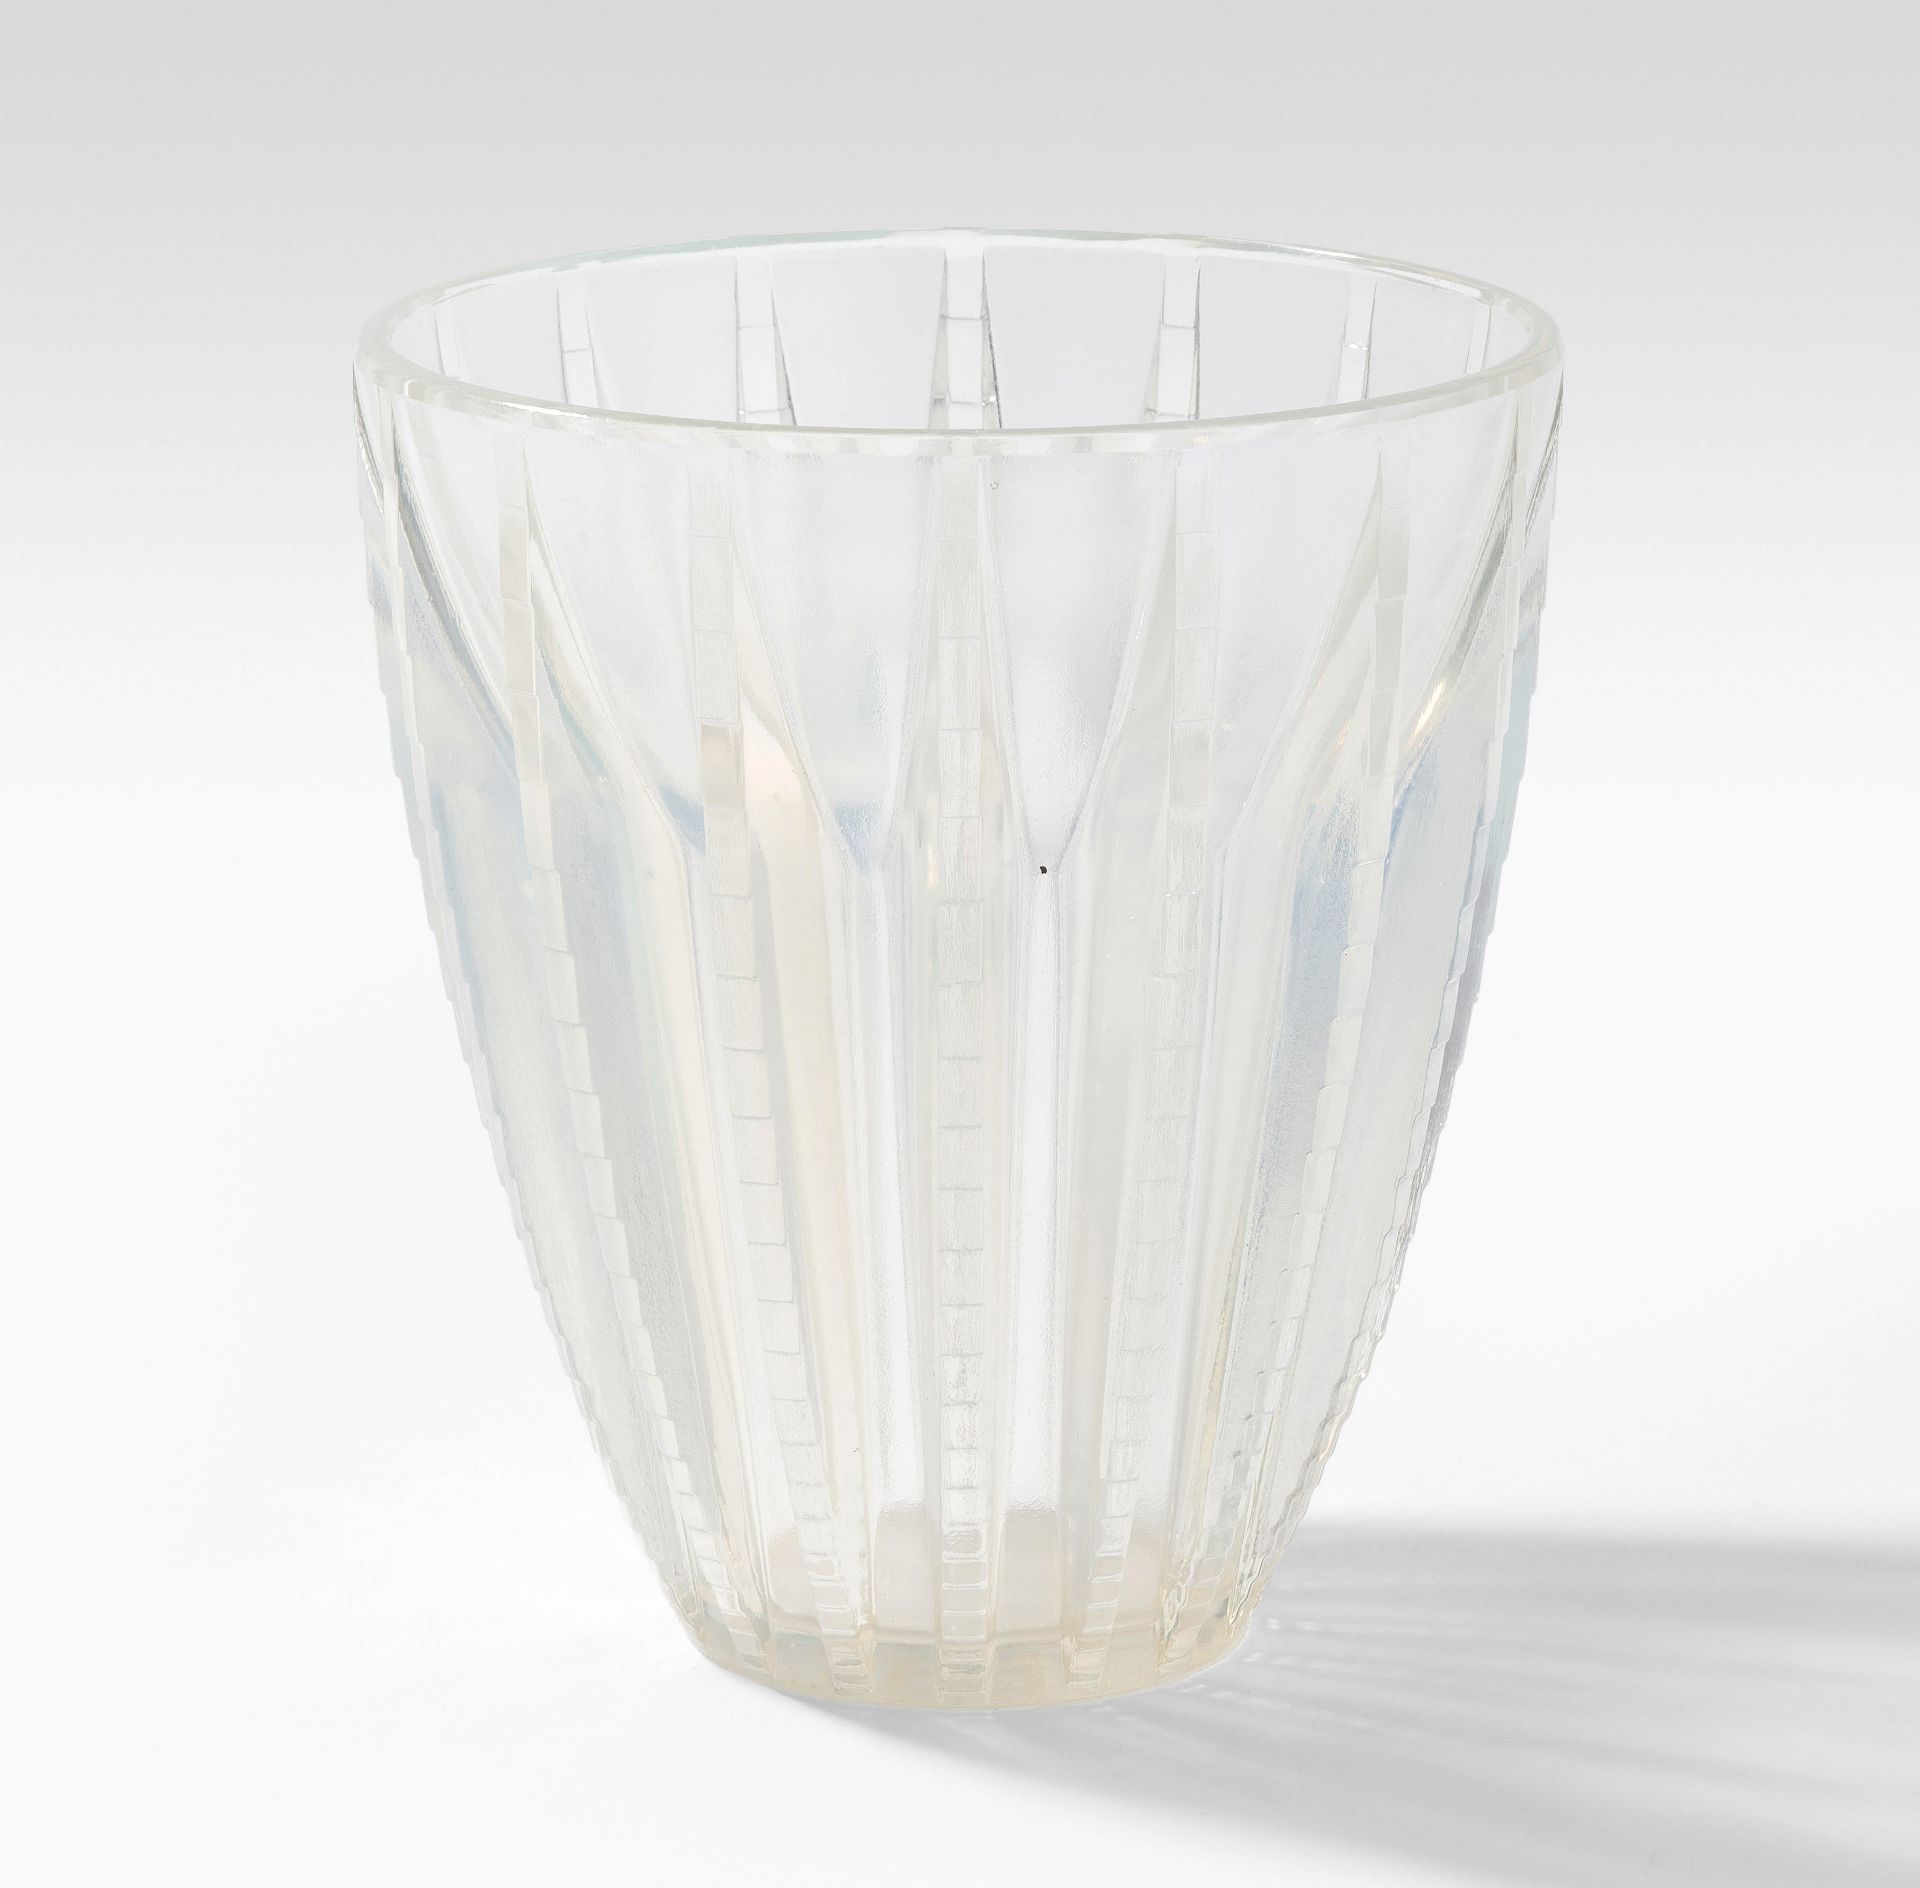 René Lalique, Vase "Chamonix"